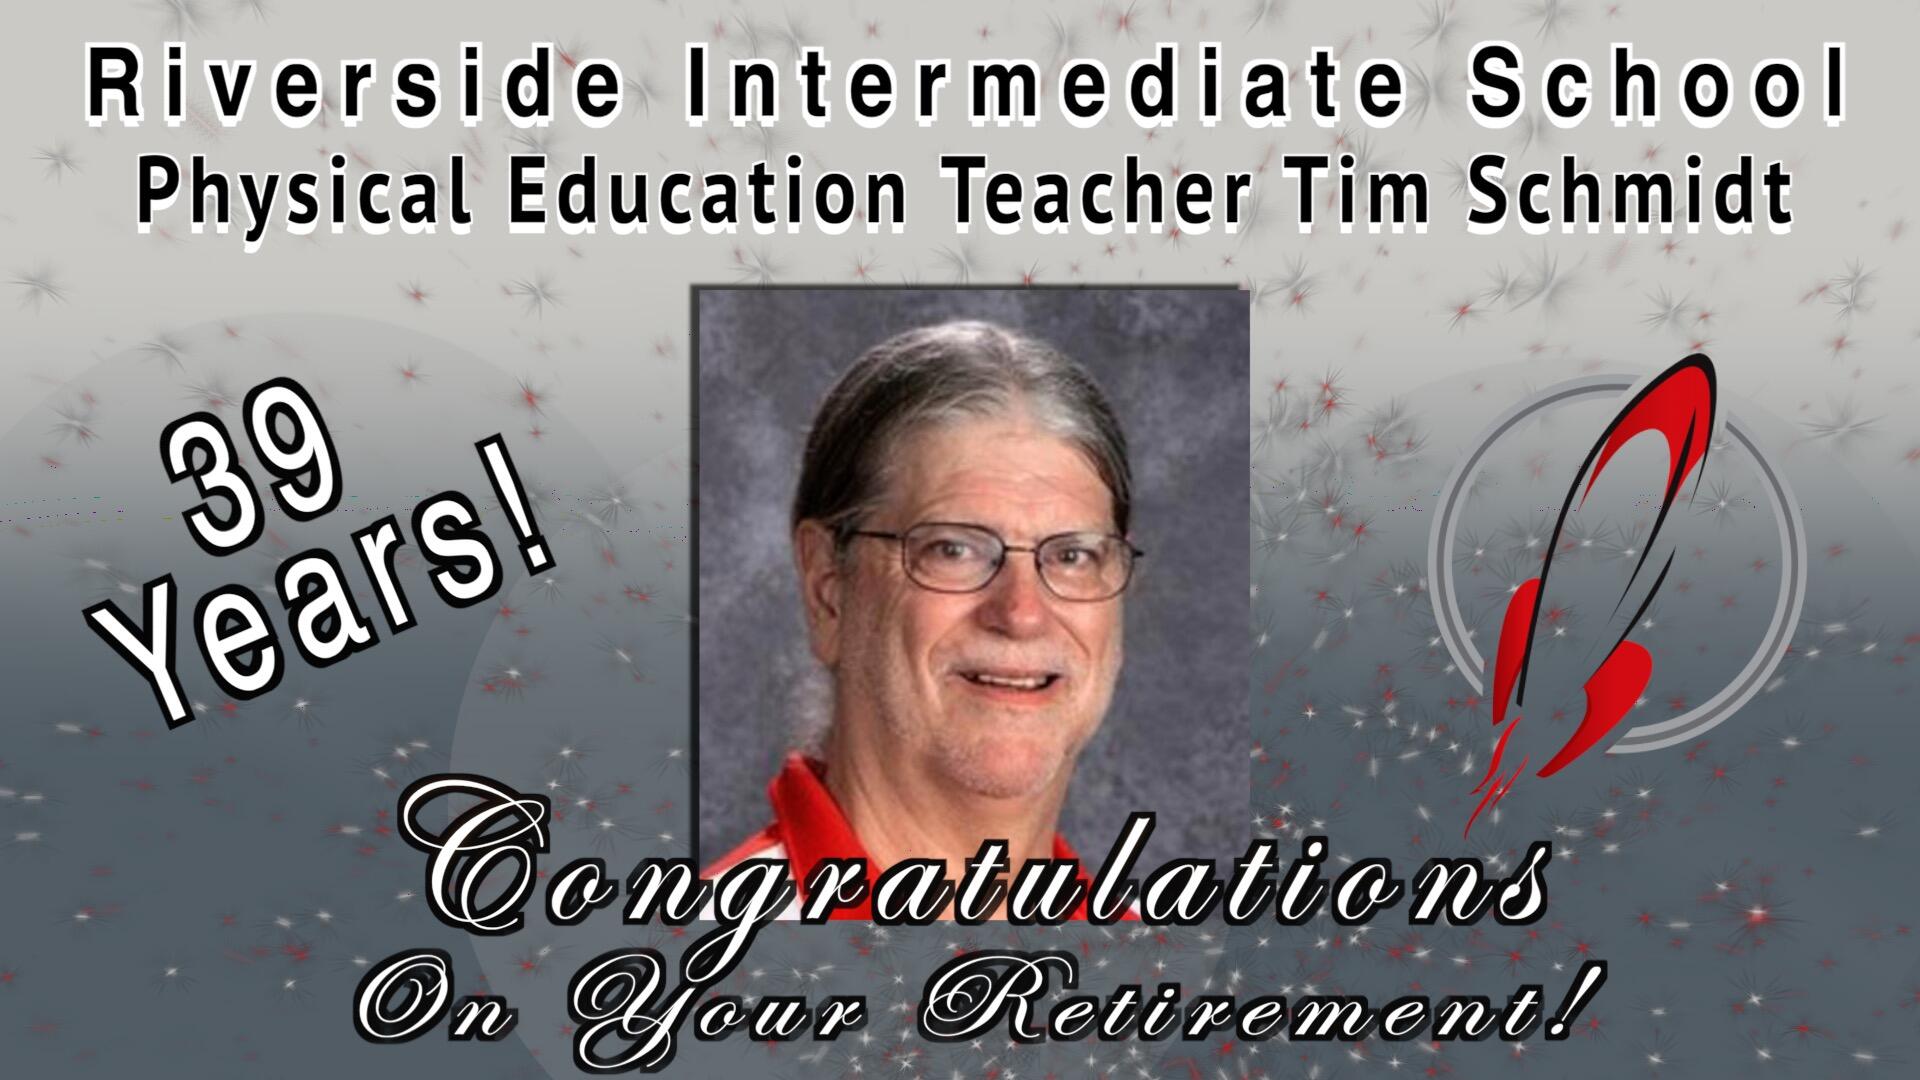 Riverside Intermediate School Physical Education Teacher Tim Schmidt 39 years! Congratulations On Your Retirement!